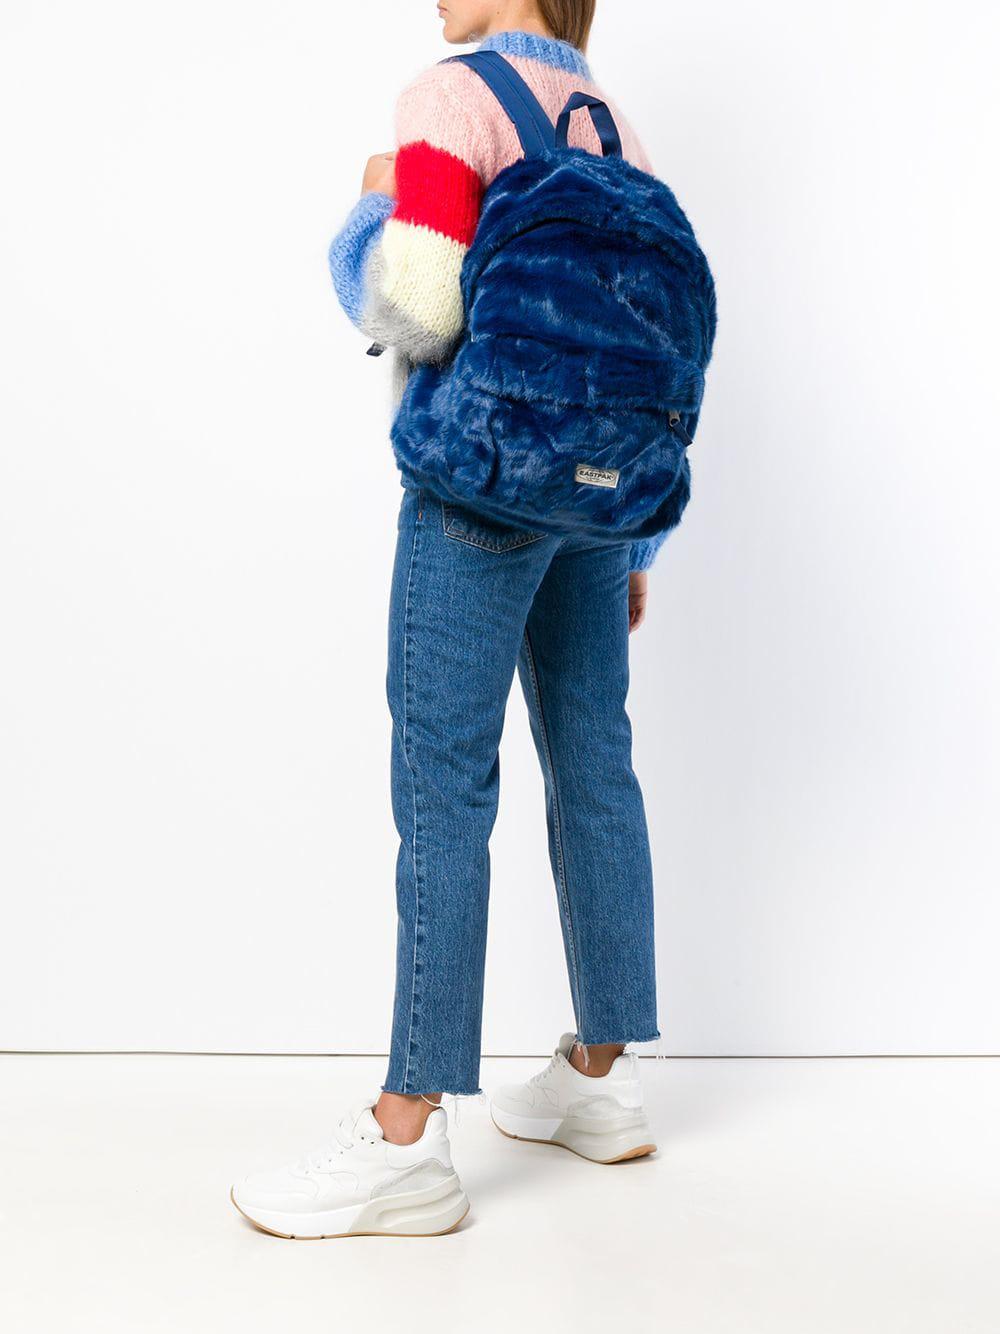 Fur Backpack in Blue